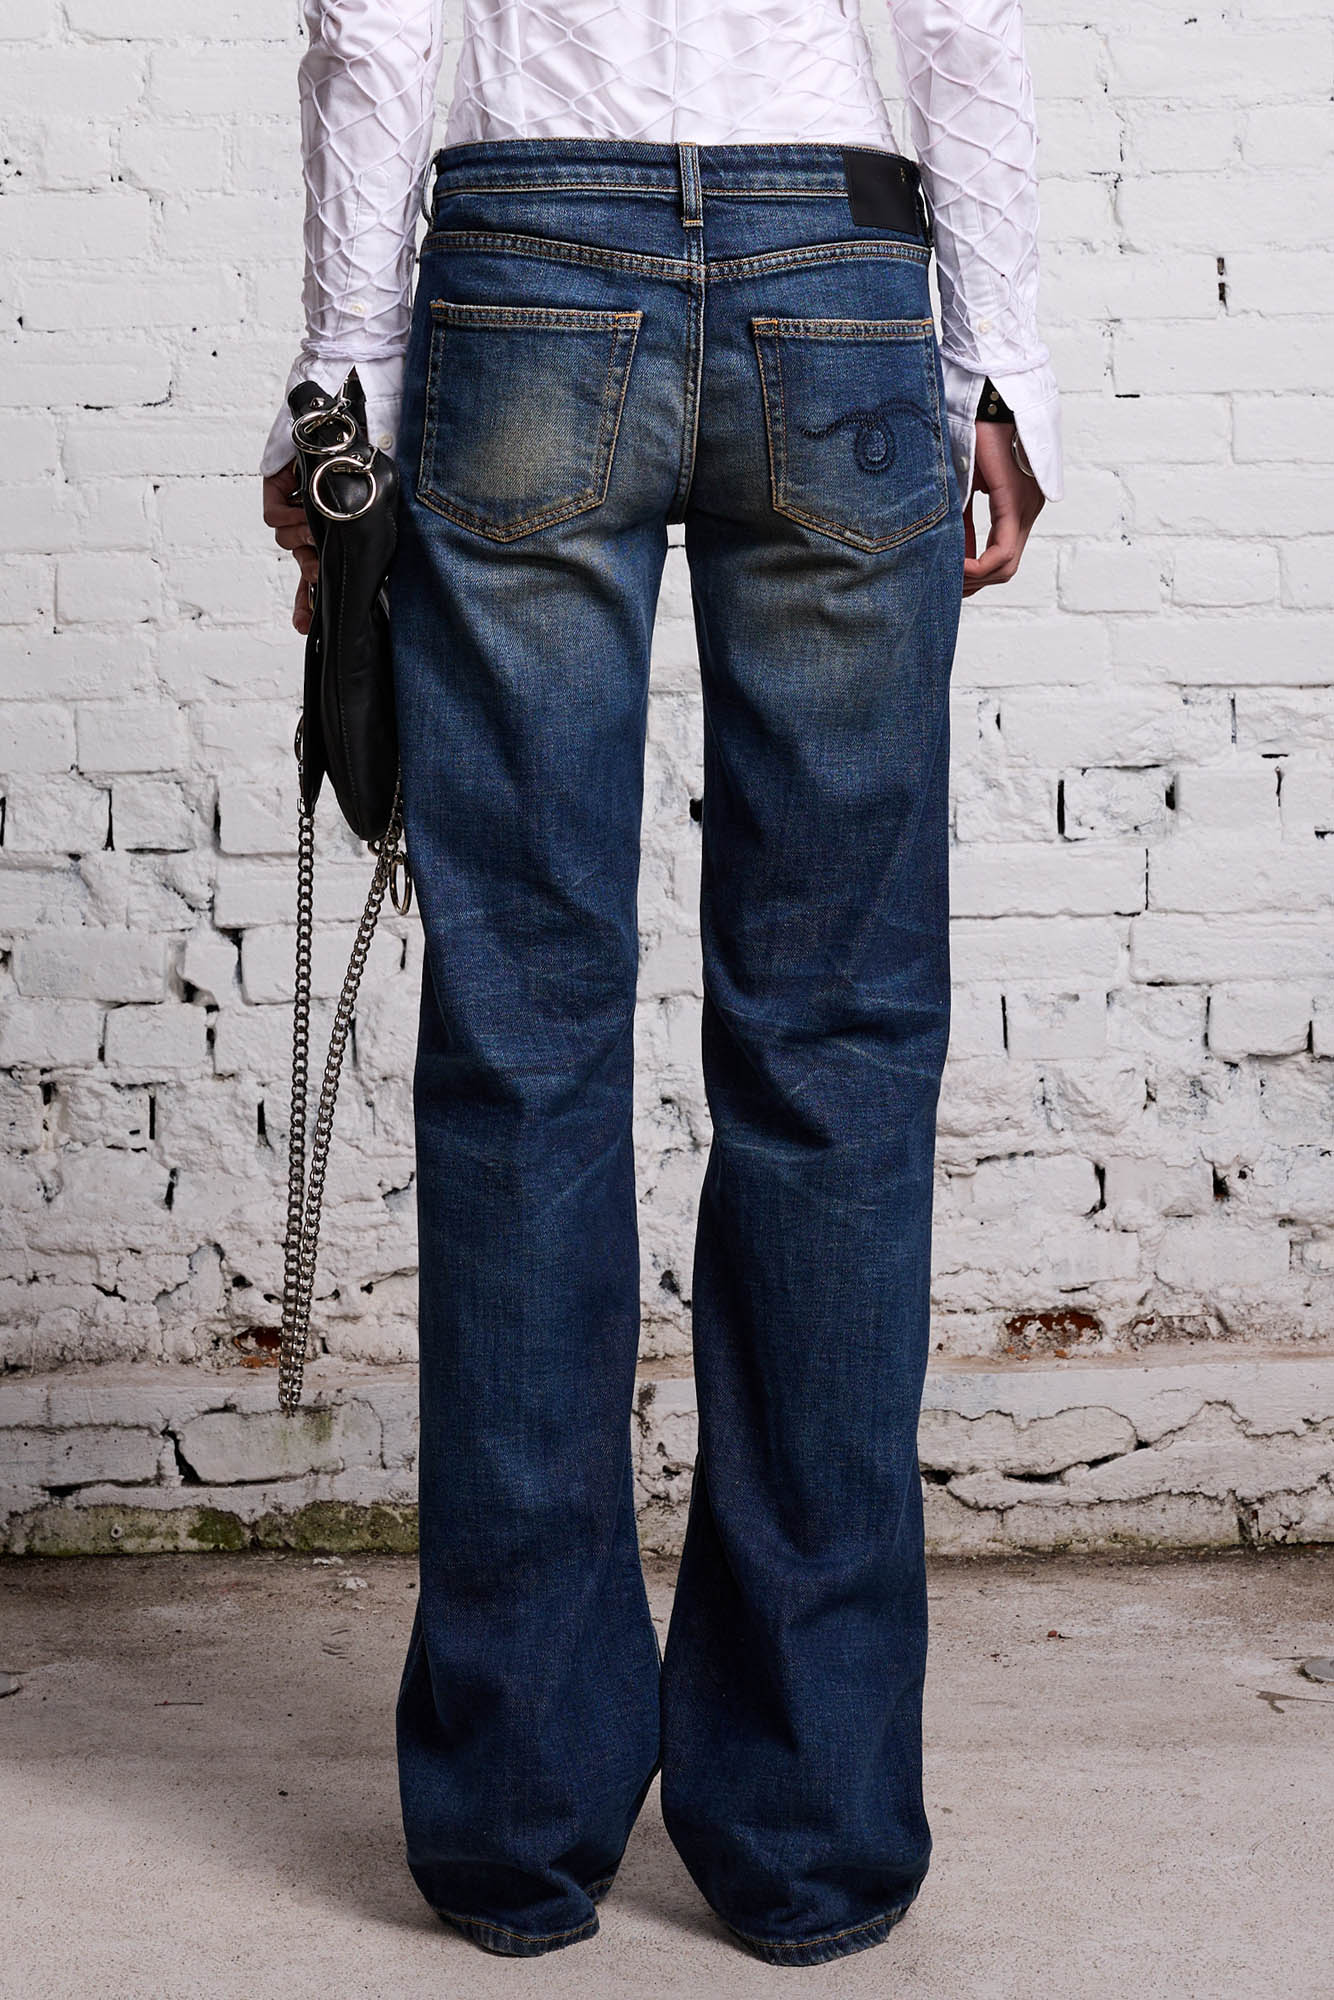 R13 Boy Flare Jeans in Ansel Blue 25